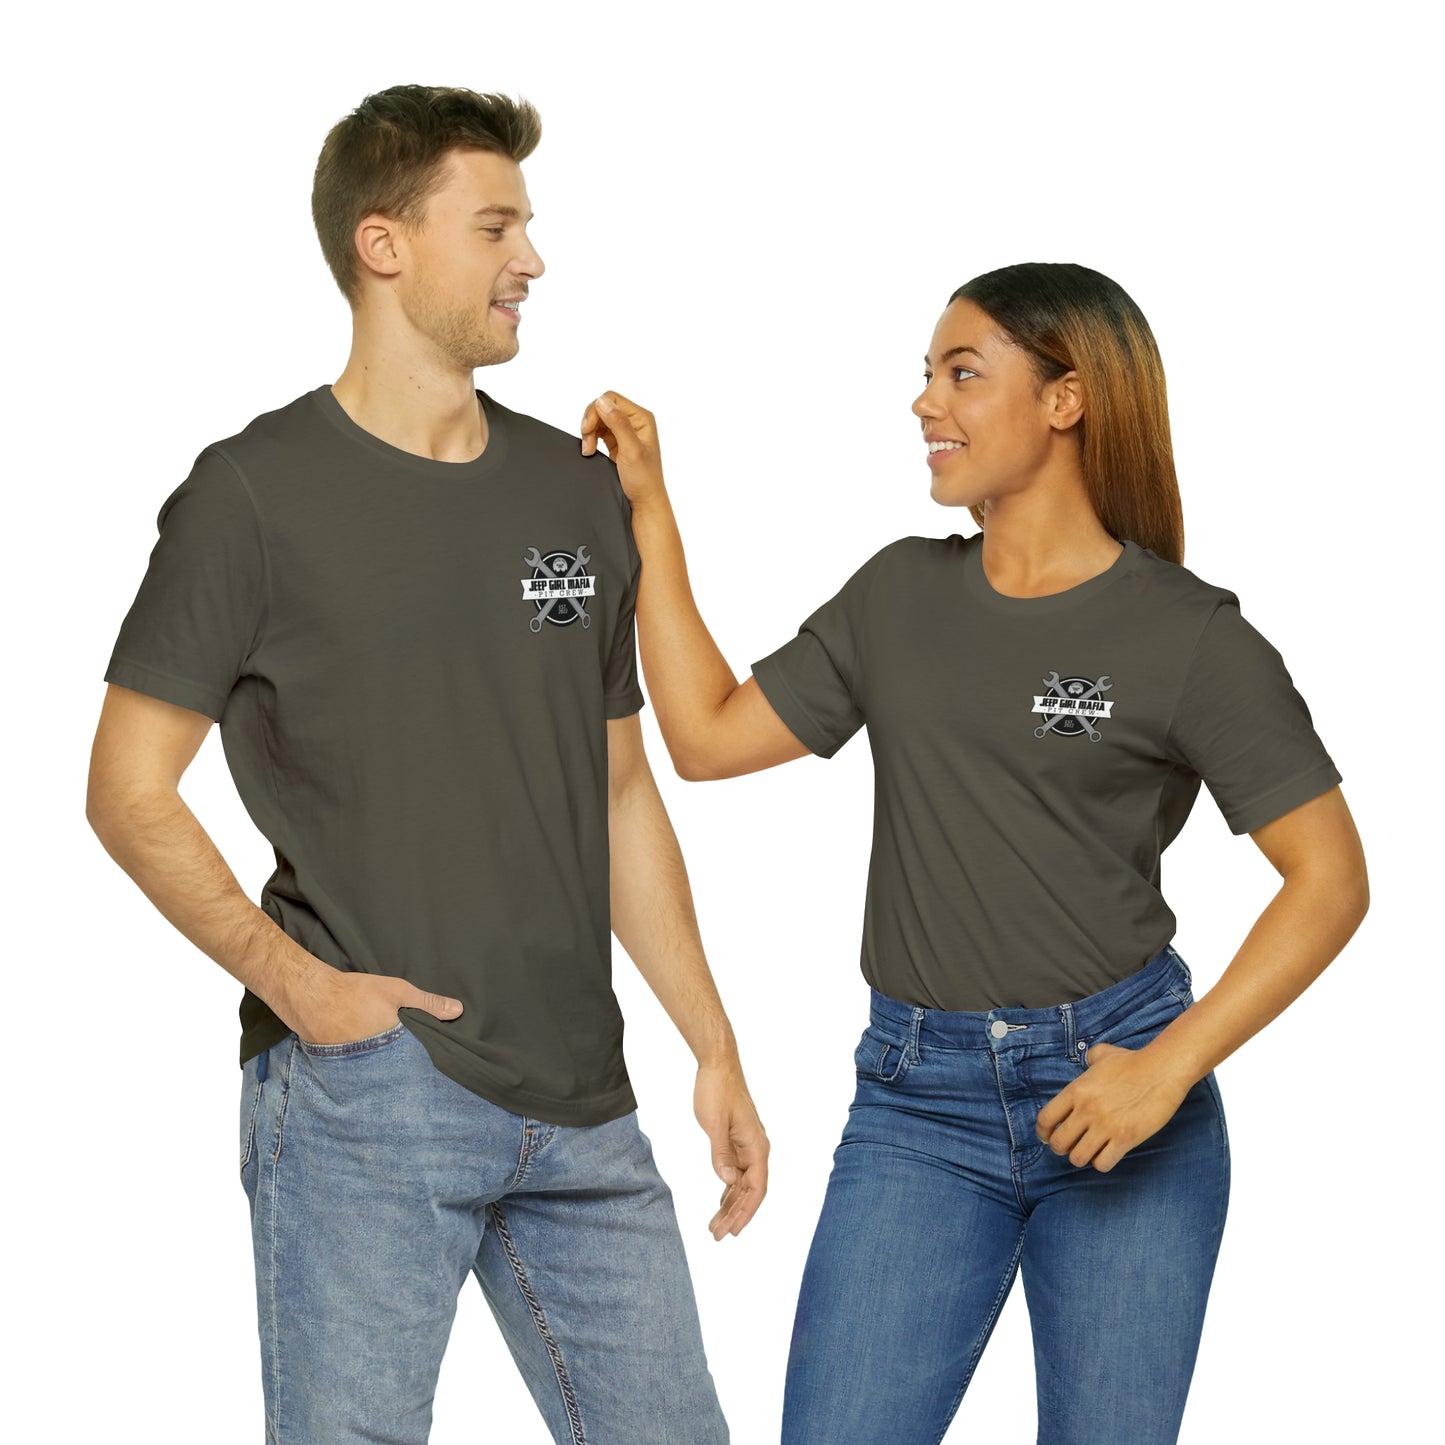 Pit Crew - Dirt Never Hurt | Unisex T-Shirt